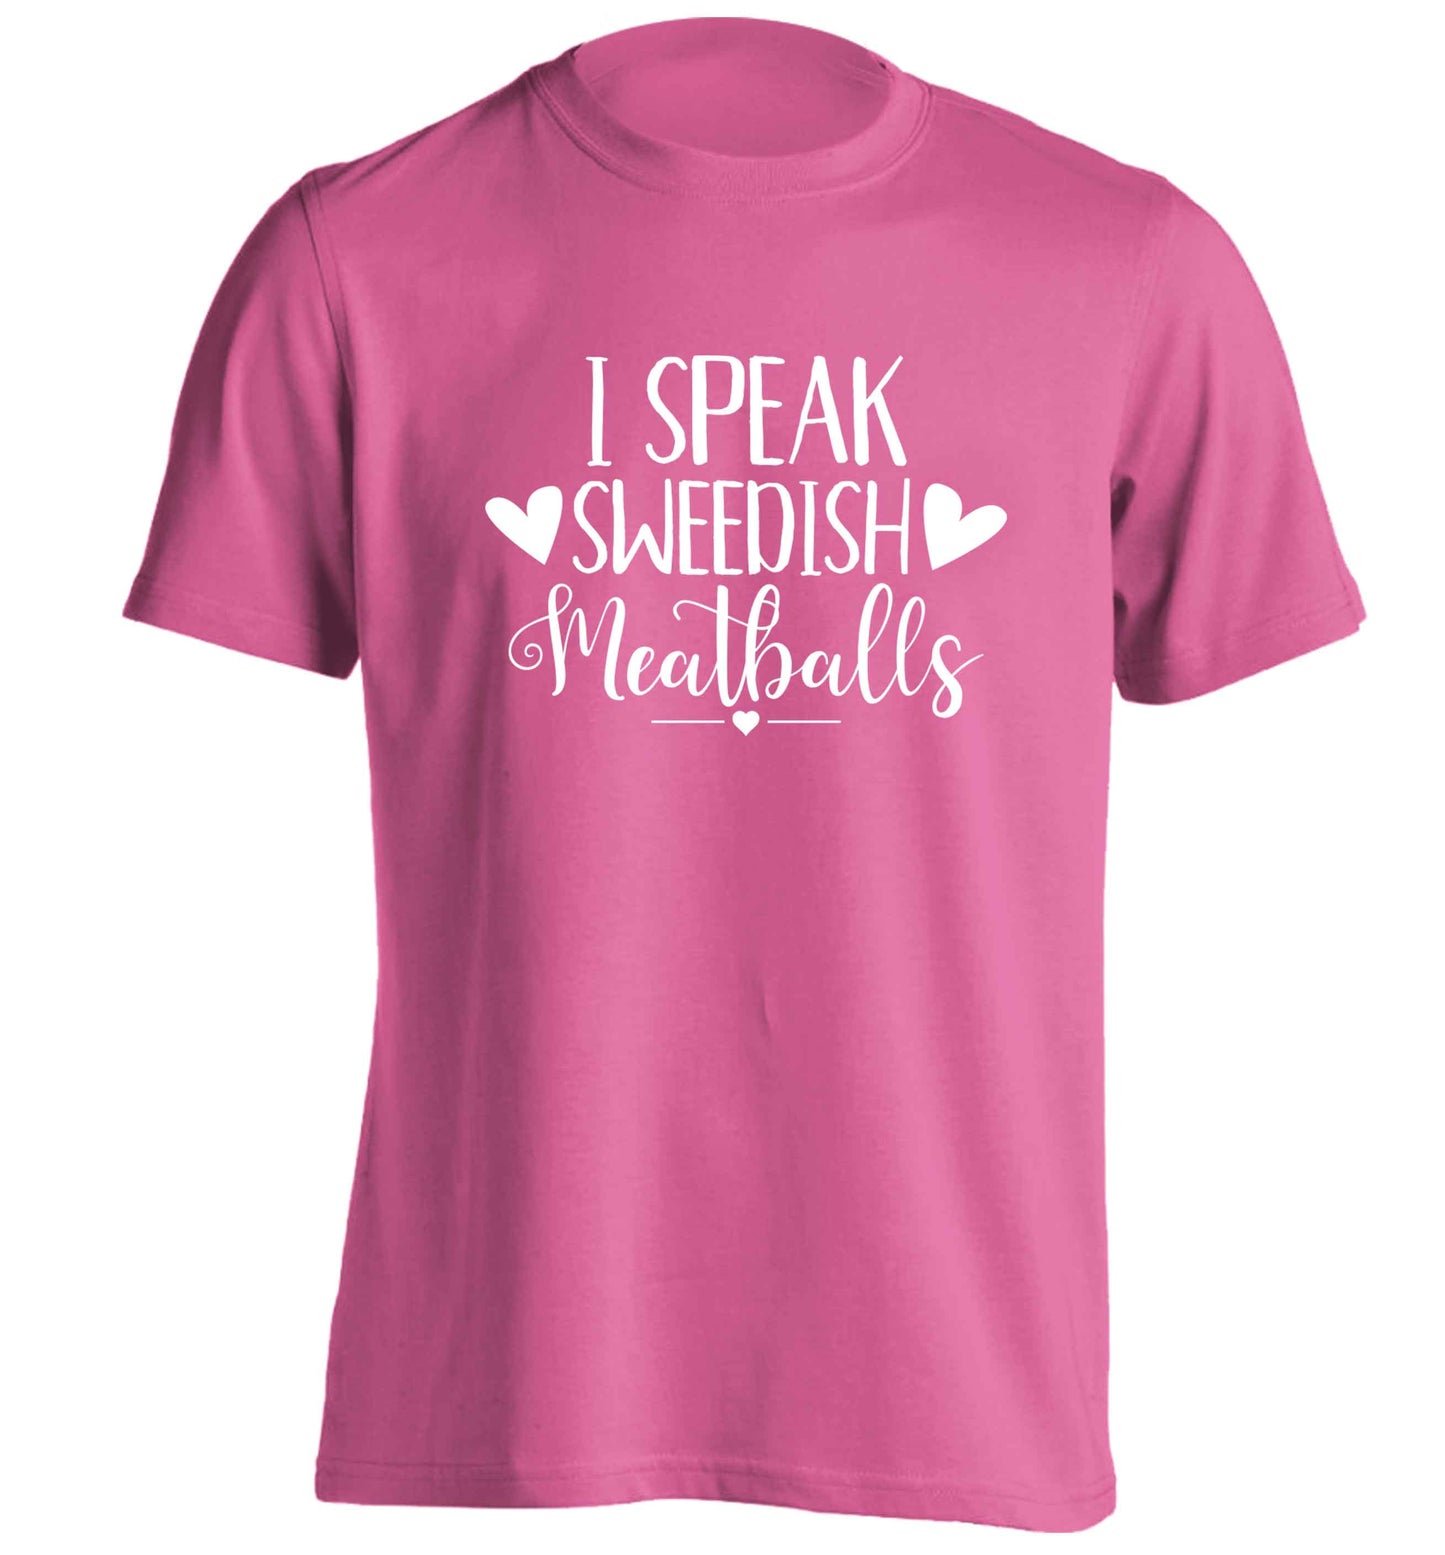 I speak sweedish...meatballs adults unisex pink Tshirt 2XL